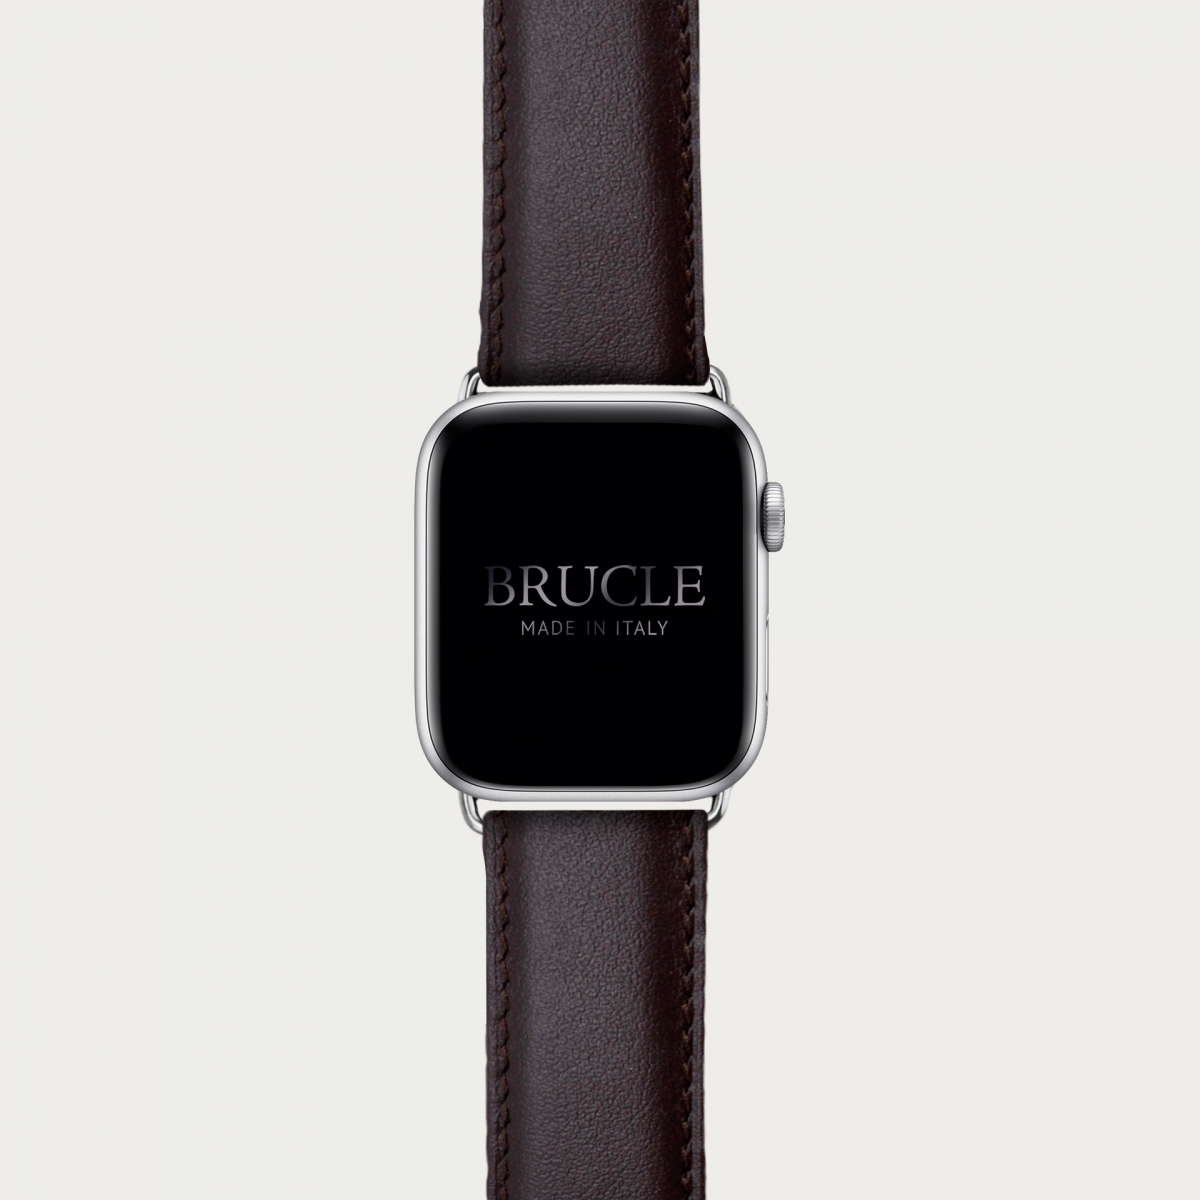 Brucle Armband kompatibel mit Apple Watch / Samsung Smartwatch, dunkelbraun